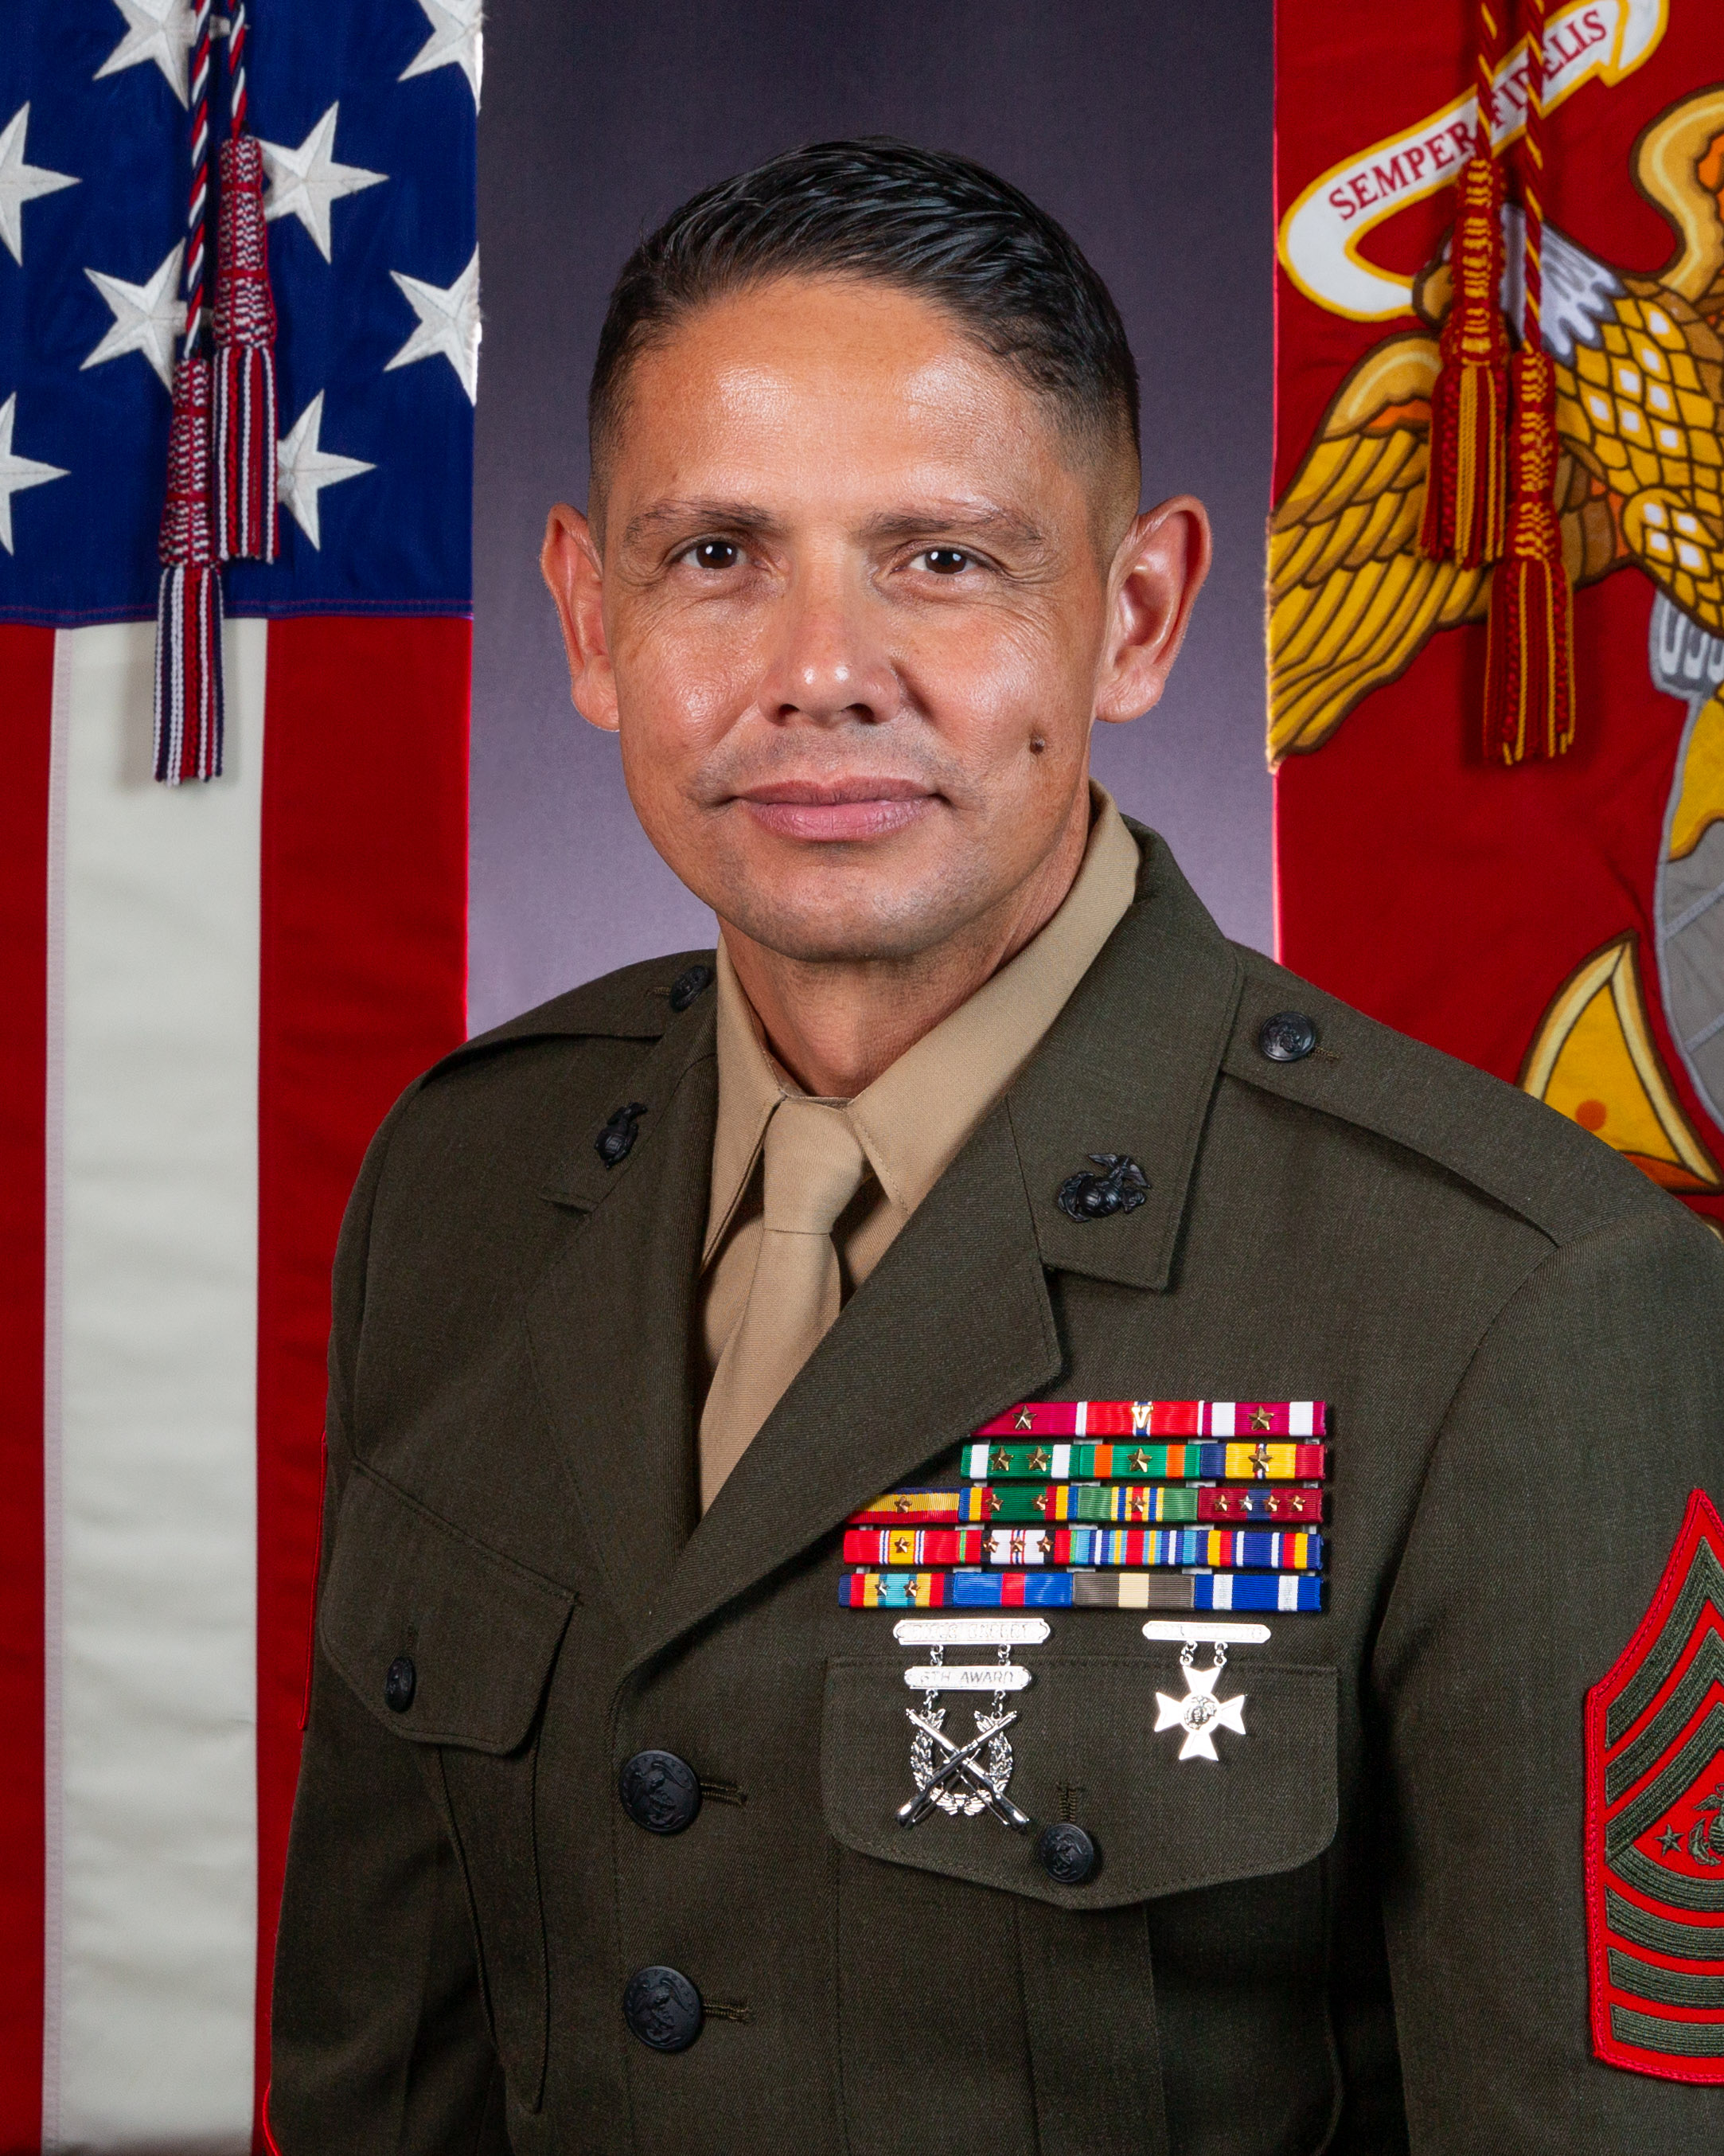 United States Marine Corps Color Guard - Wikipedia